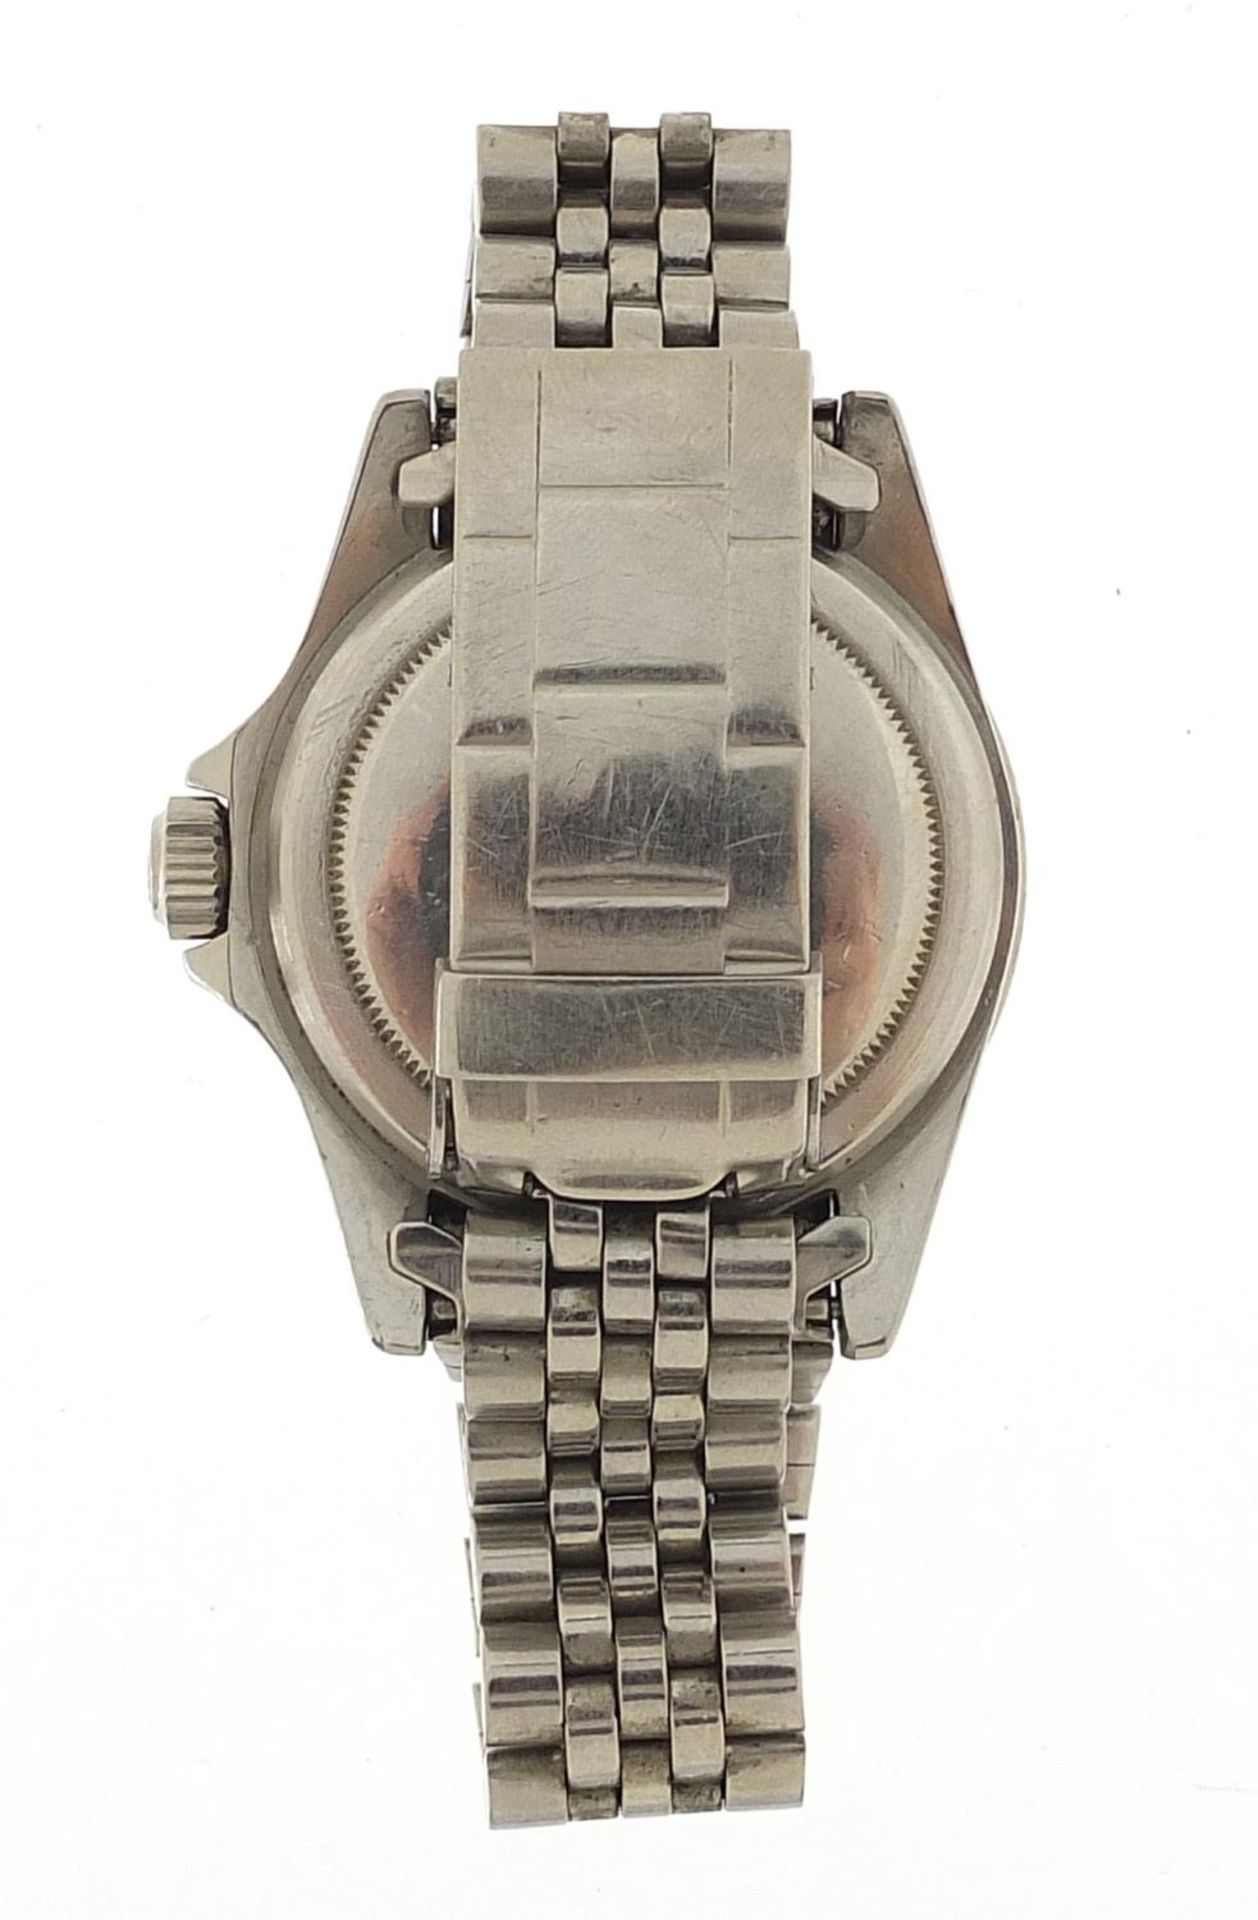 Rolex gentlemen's Submariner automatic wristwatch, ref 5513, serial number 1005684, 40mm in diameter - Image 3 of 9